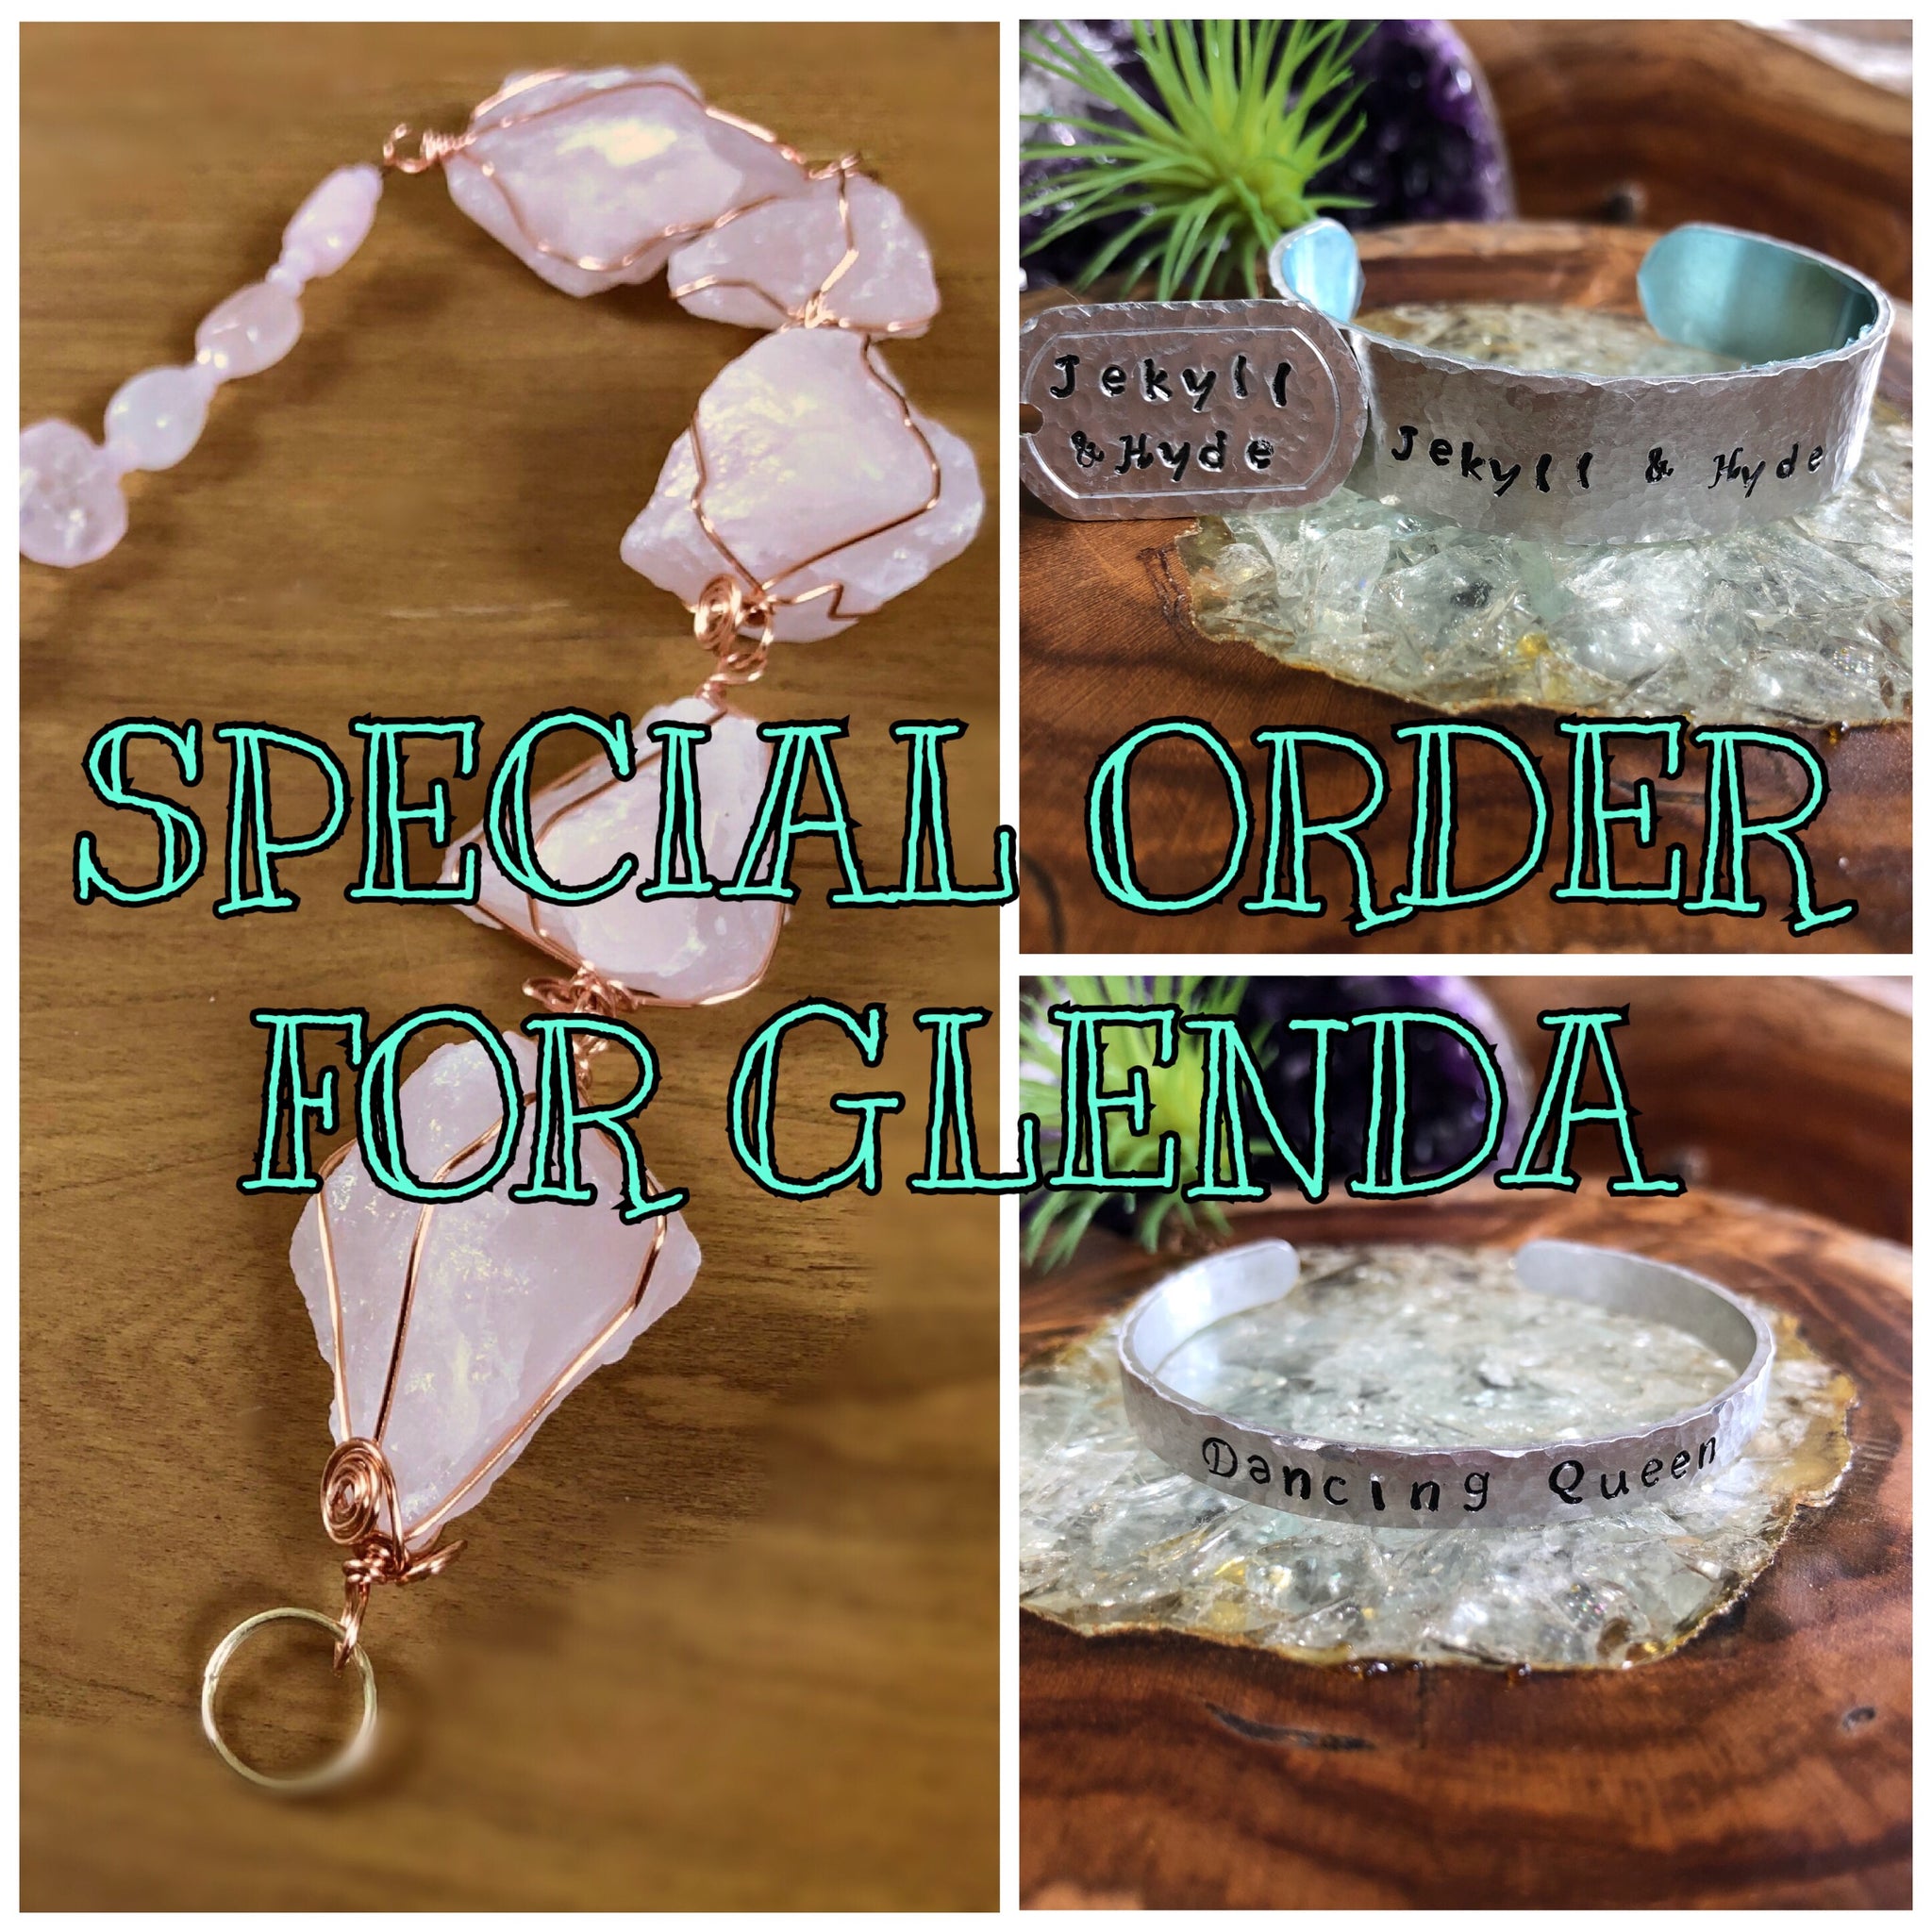 Special order for Glenda